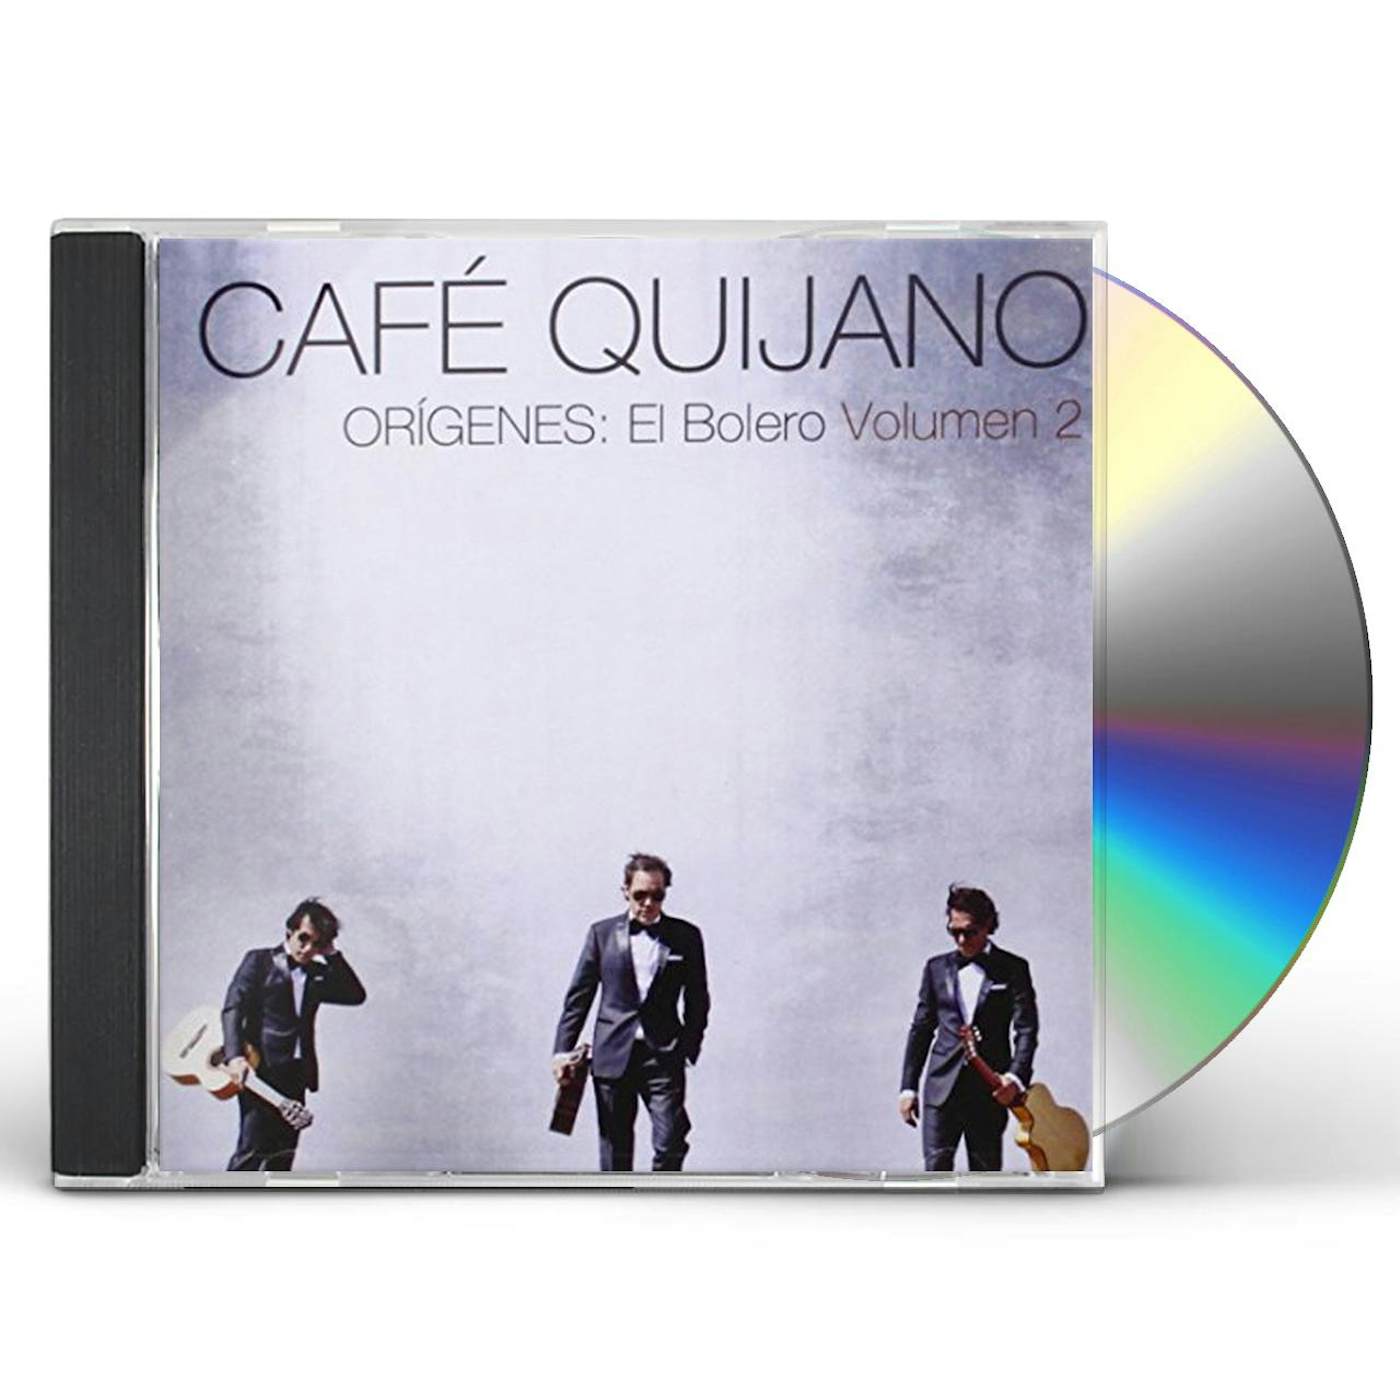 Café Quijano ORIGENES:EL BOLERO VOLUMEN 2 CD